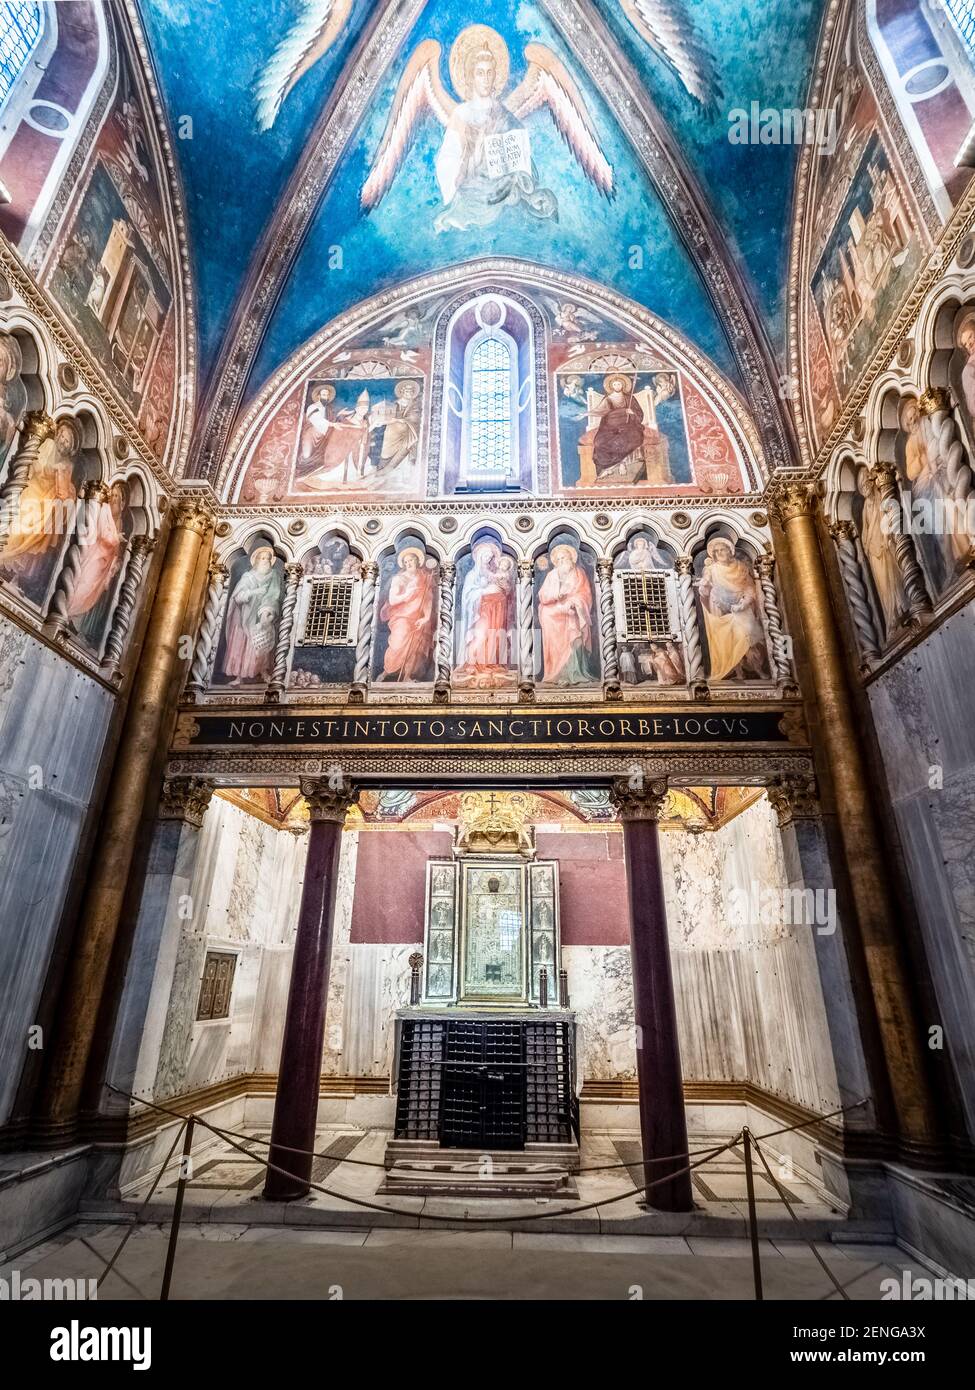 Main altar of the Sancta Sanctorum Roman Catholic chapel (Chiesa di San Lorenzo in Palatio ad Sancta Sanctorum) - Rome, Italy Stock Photo